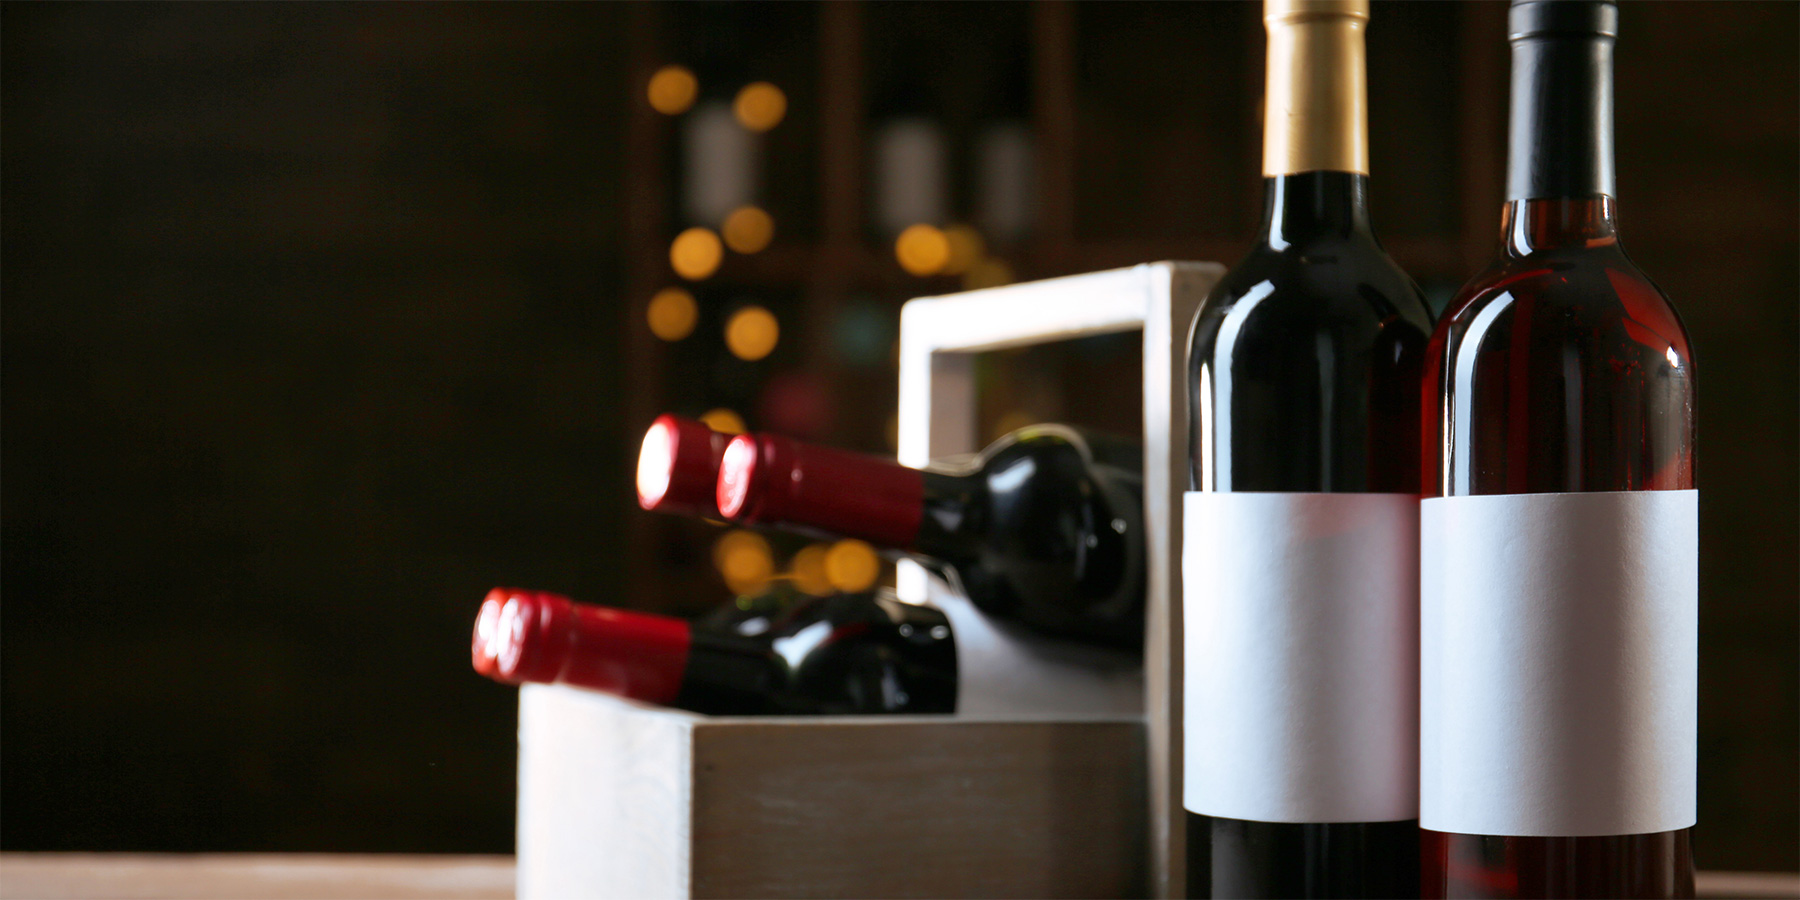 Italian Wine Private Label - Create your own brand of wine